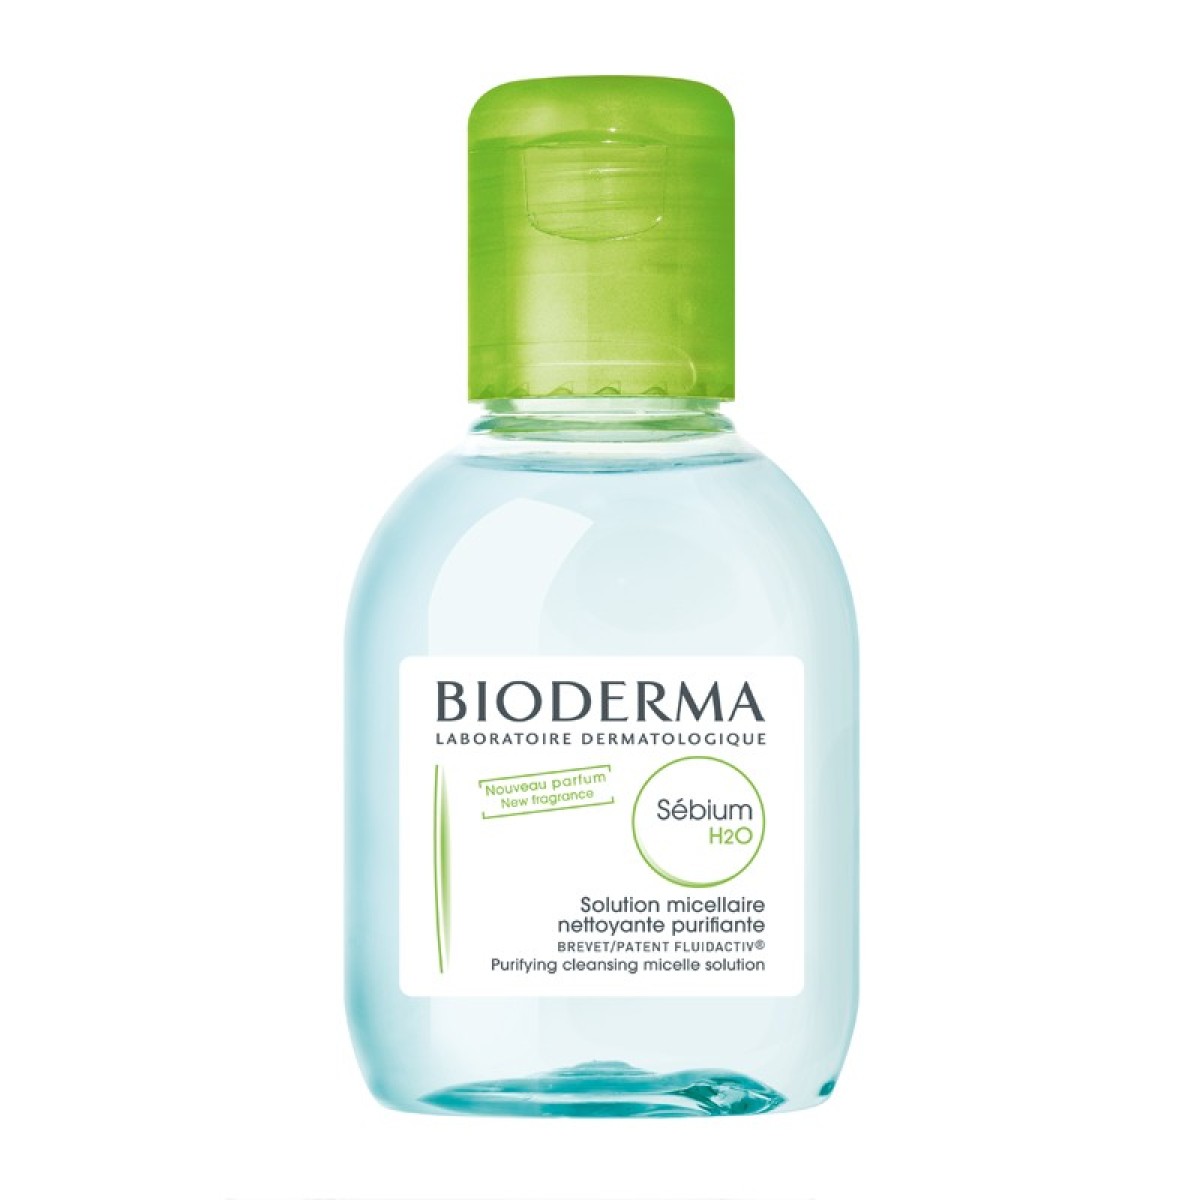 Bioderma |Sebium H2O Νερό Ντεμακιγιάζ |100ml